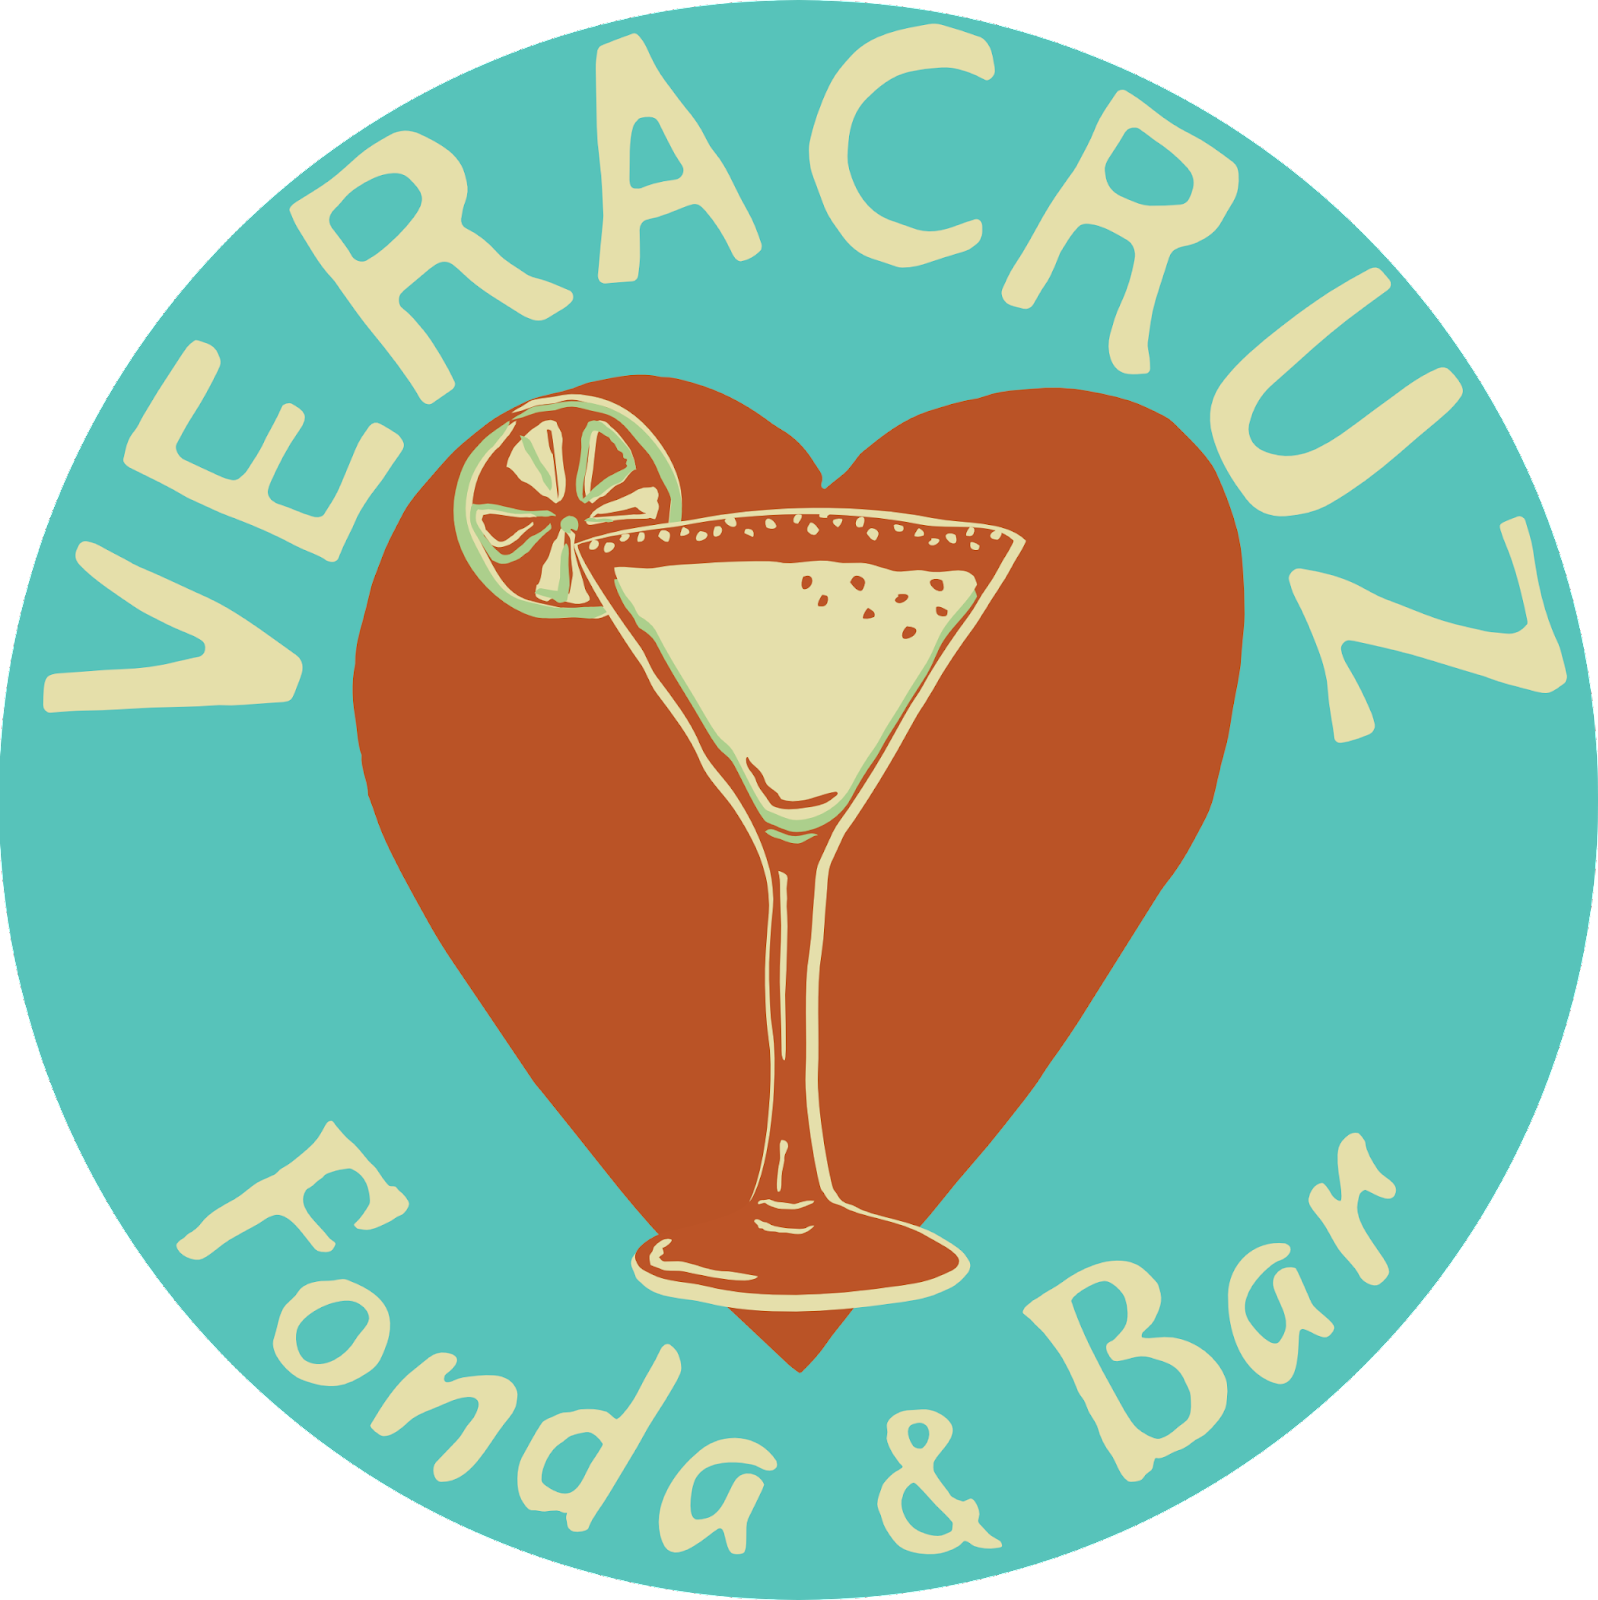 Veracruz Fonda & Bar